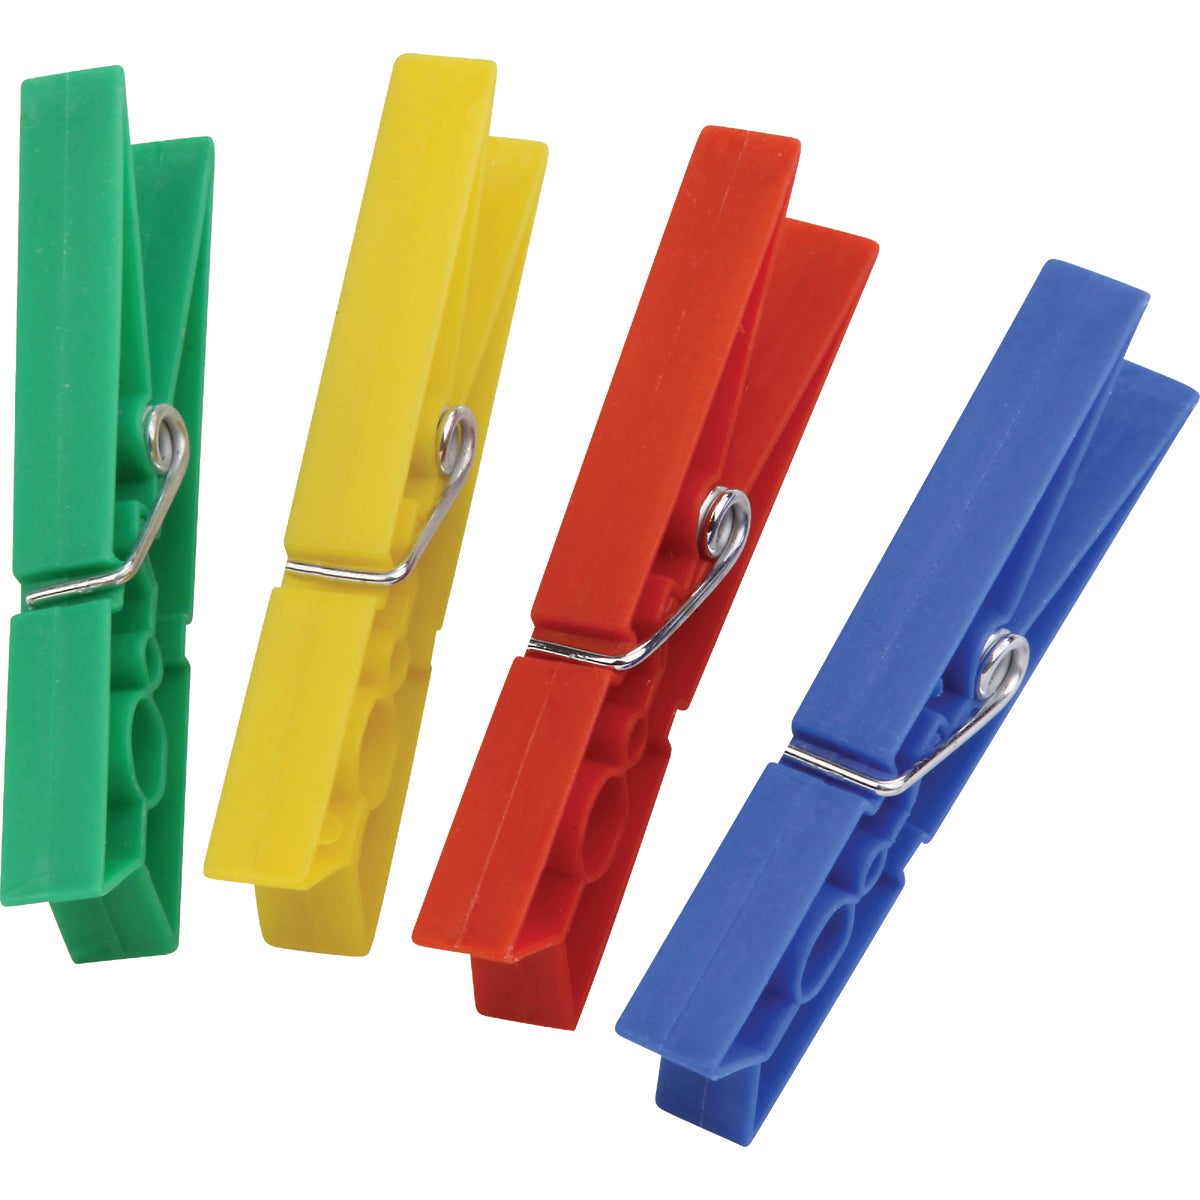 Item 620149, Classic Spring Plastic Clothespins are multicolored.